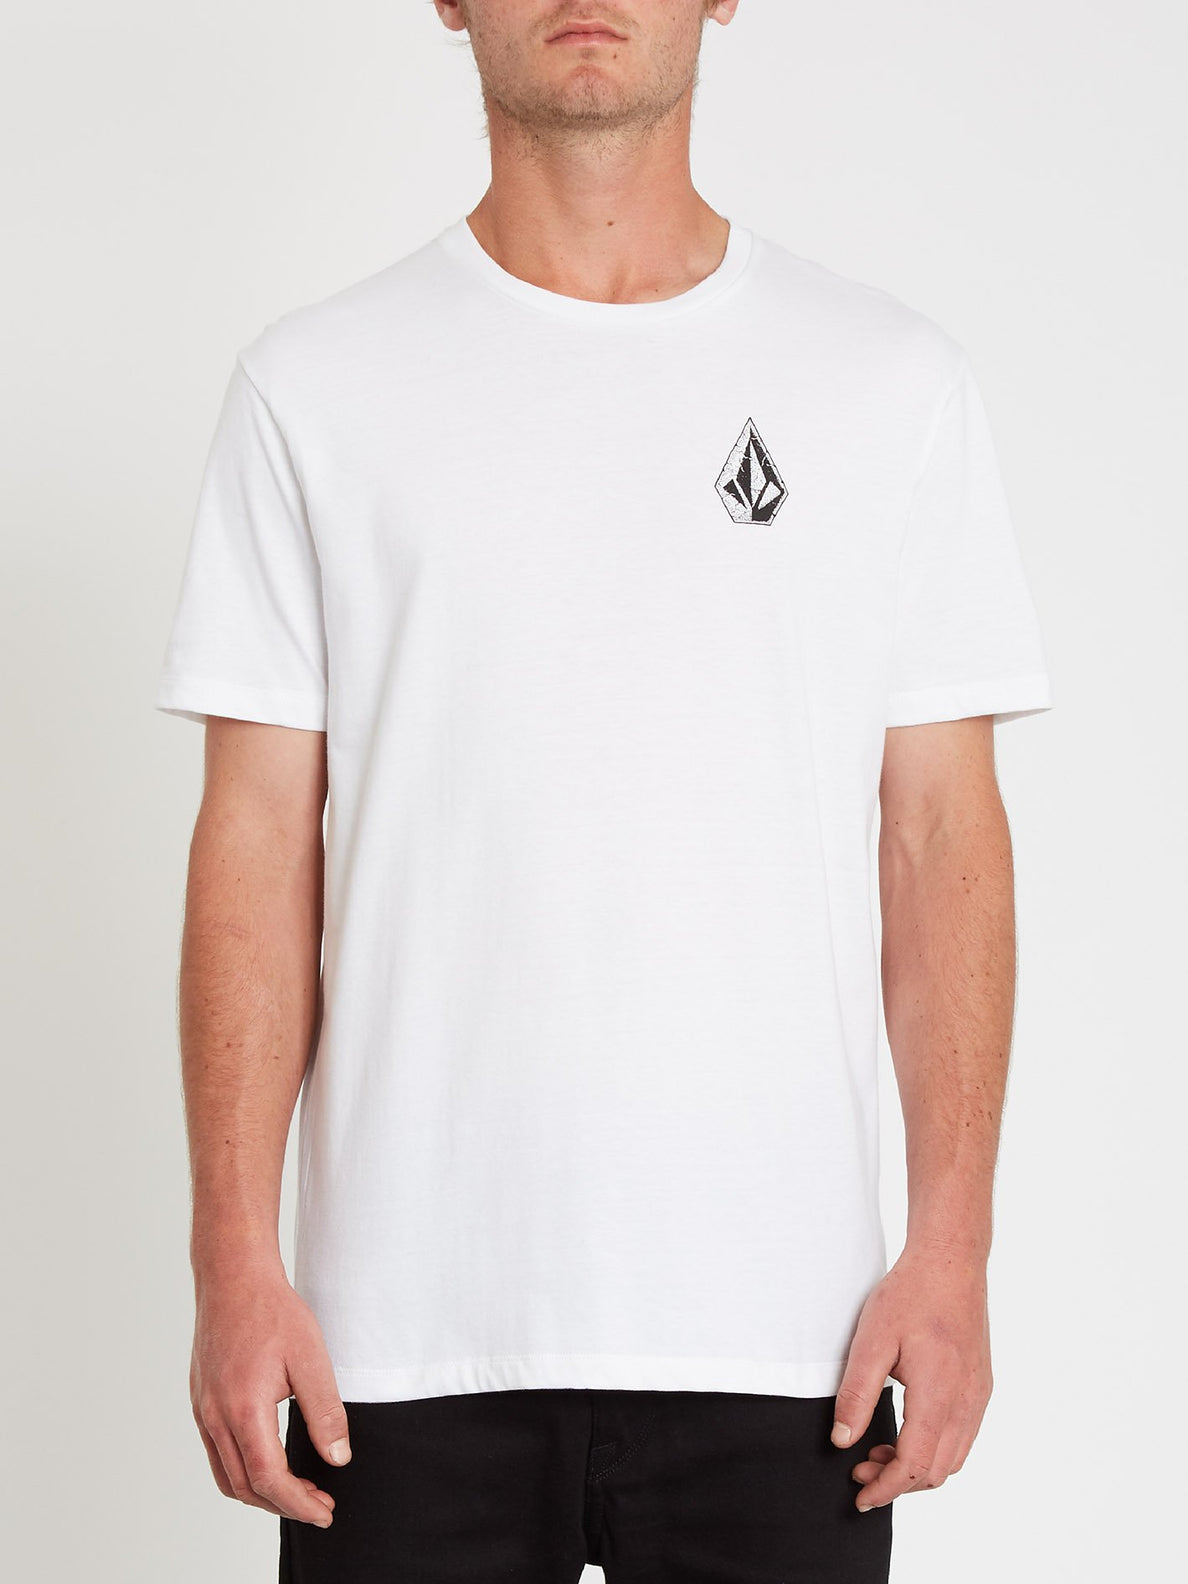 C. Vivary T-shirt - White (A5212106_WHT) [12]